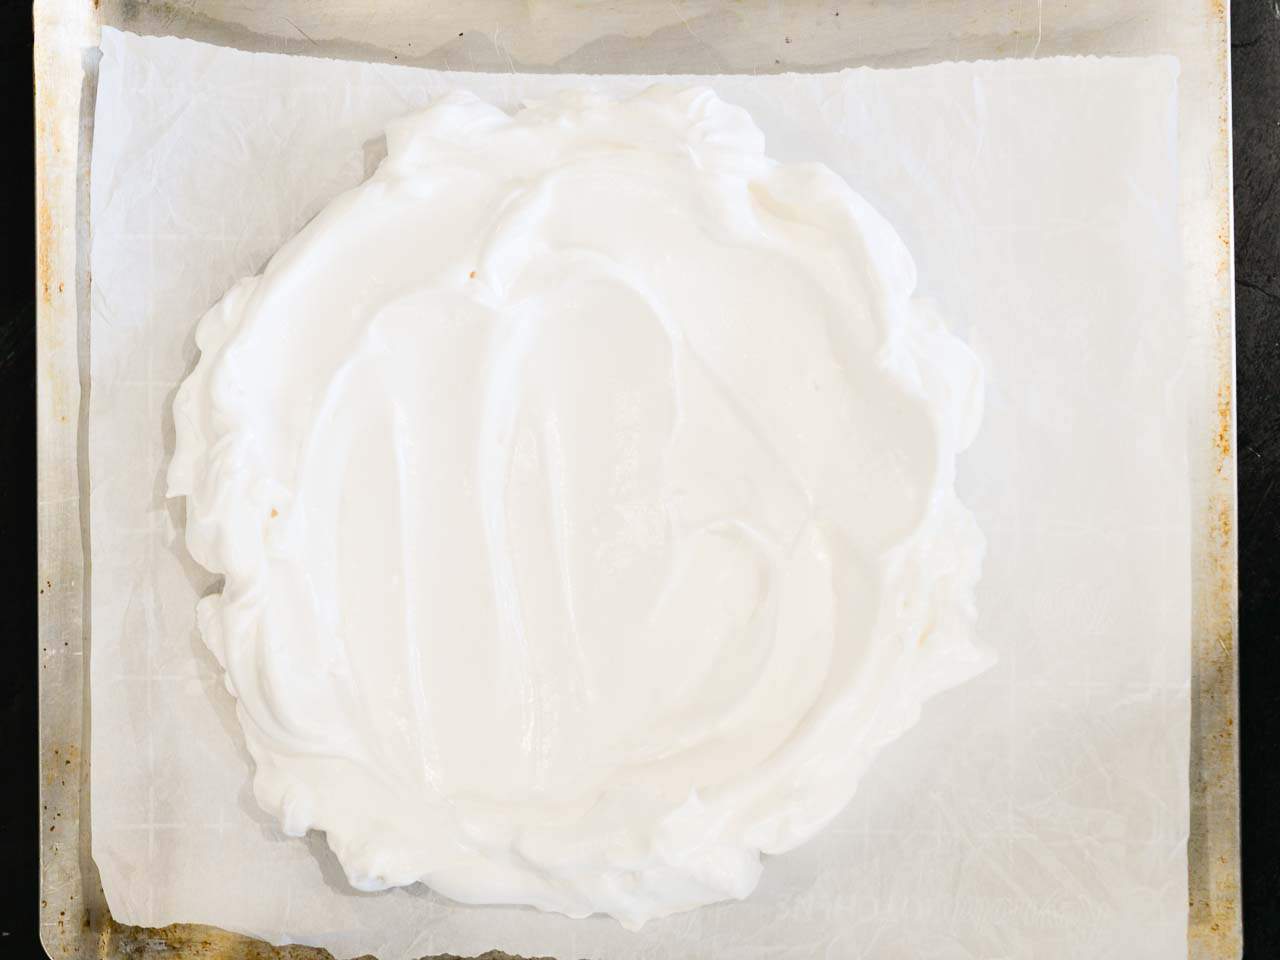 meringue before baking the pavlova